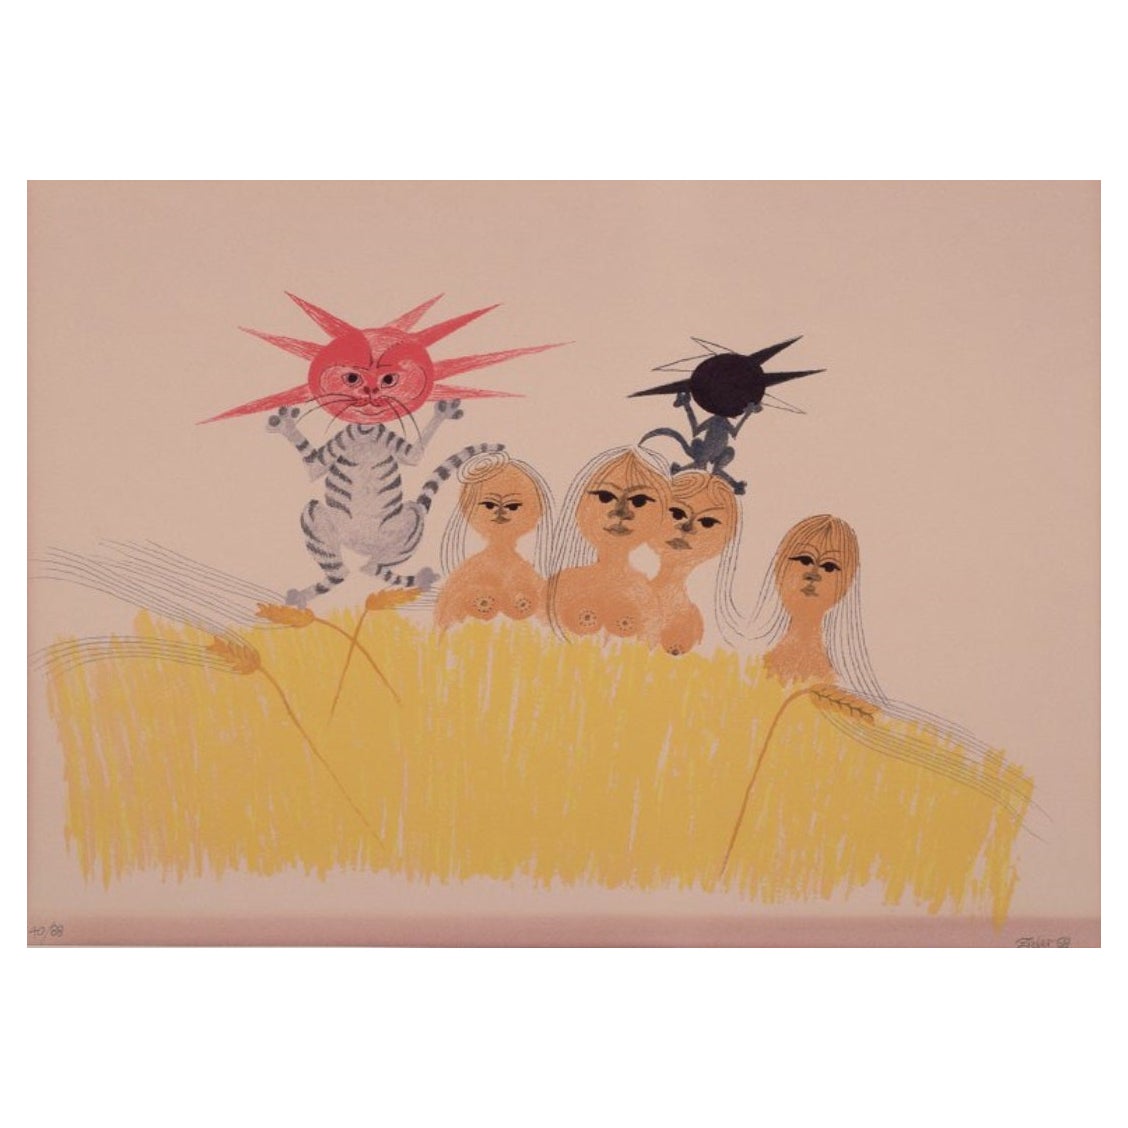 Mogens Zieler, Danish artist. Color lithograph. Dancing cat and women in a field